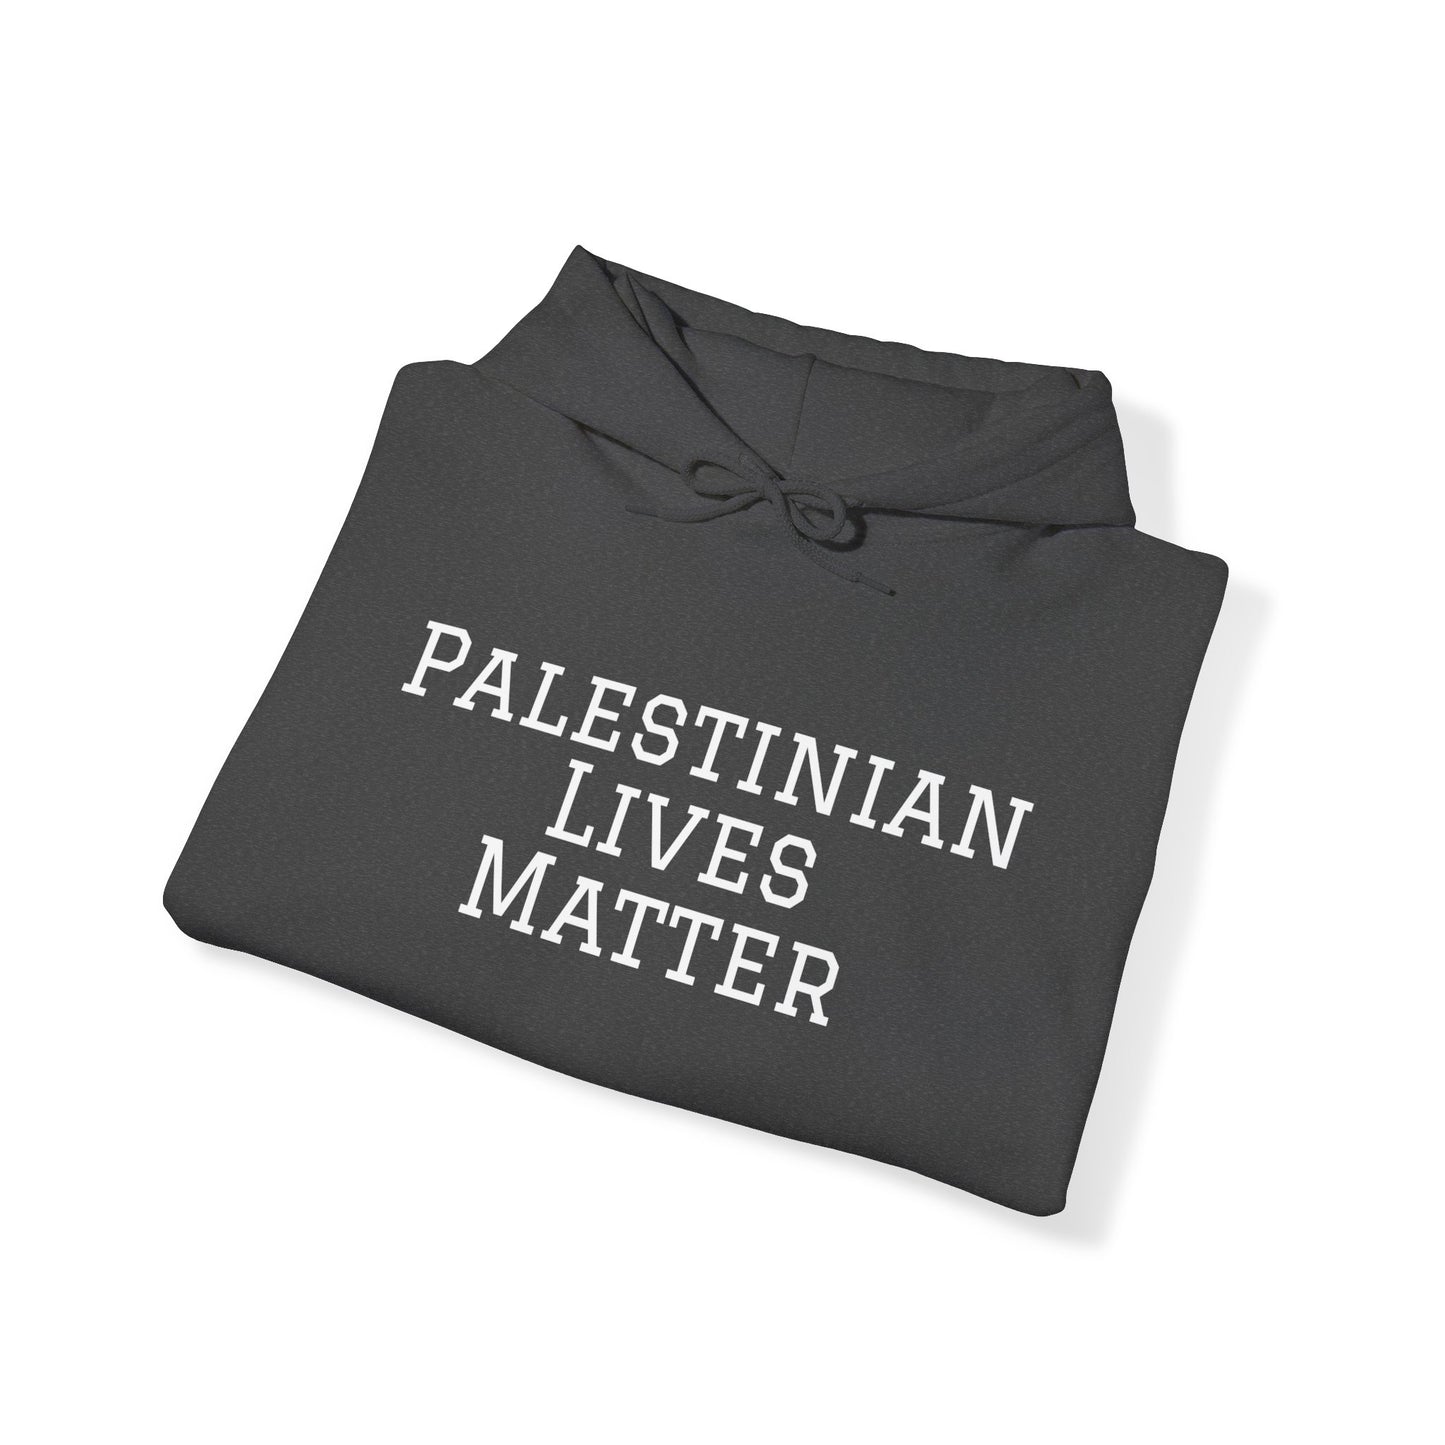 Palestinian Lives Matter Unisex Heavy Blend™ Hooded Sweatshirt